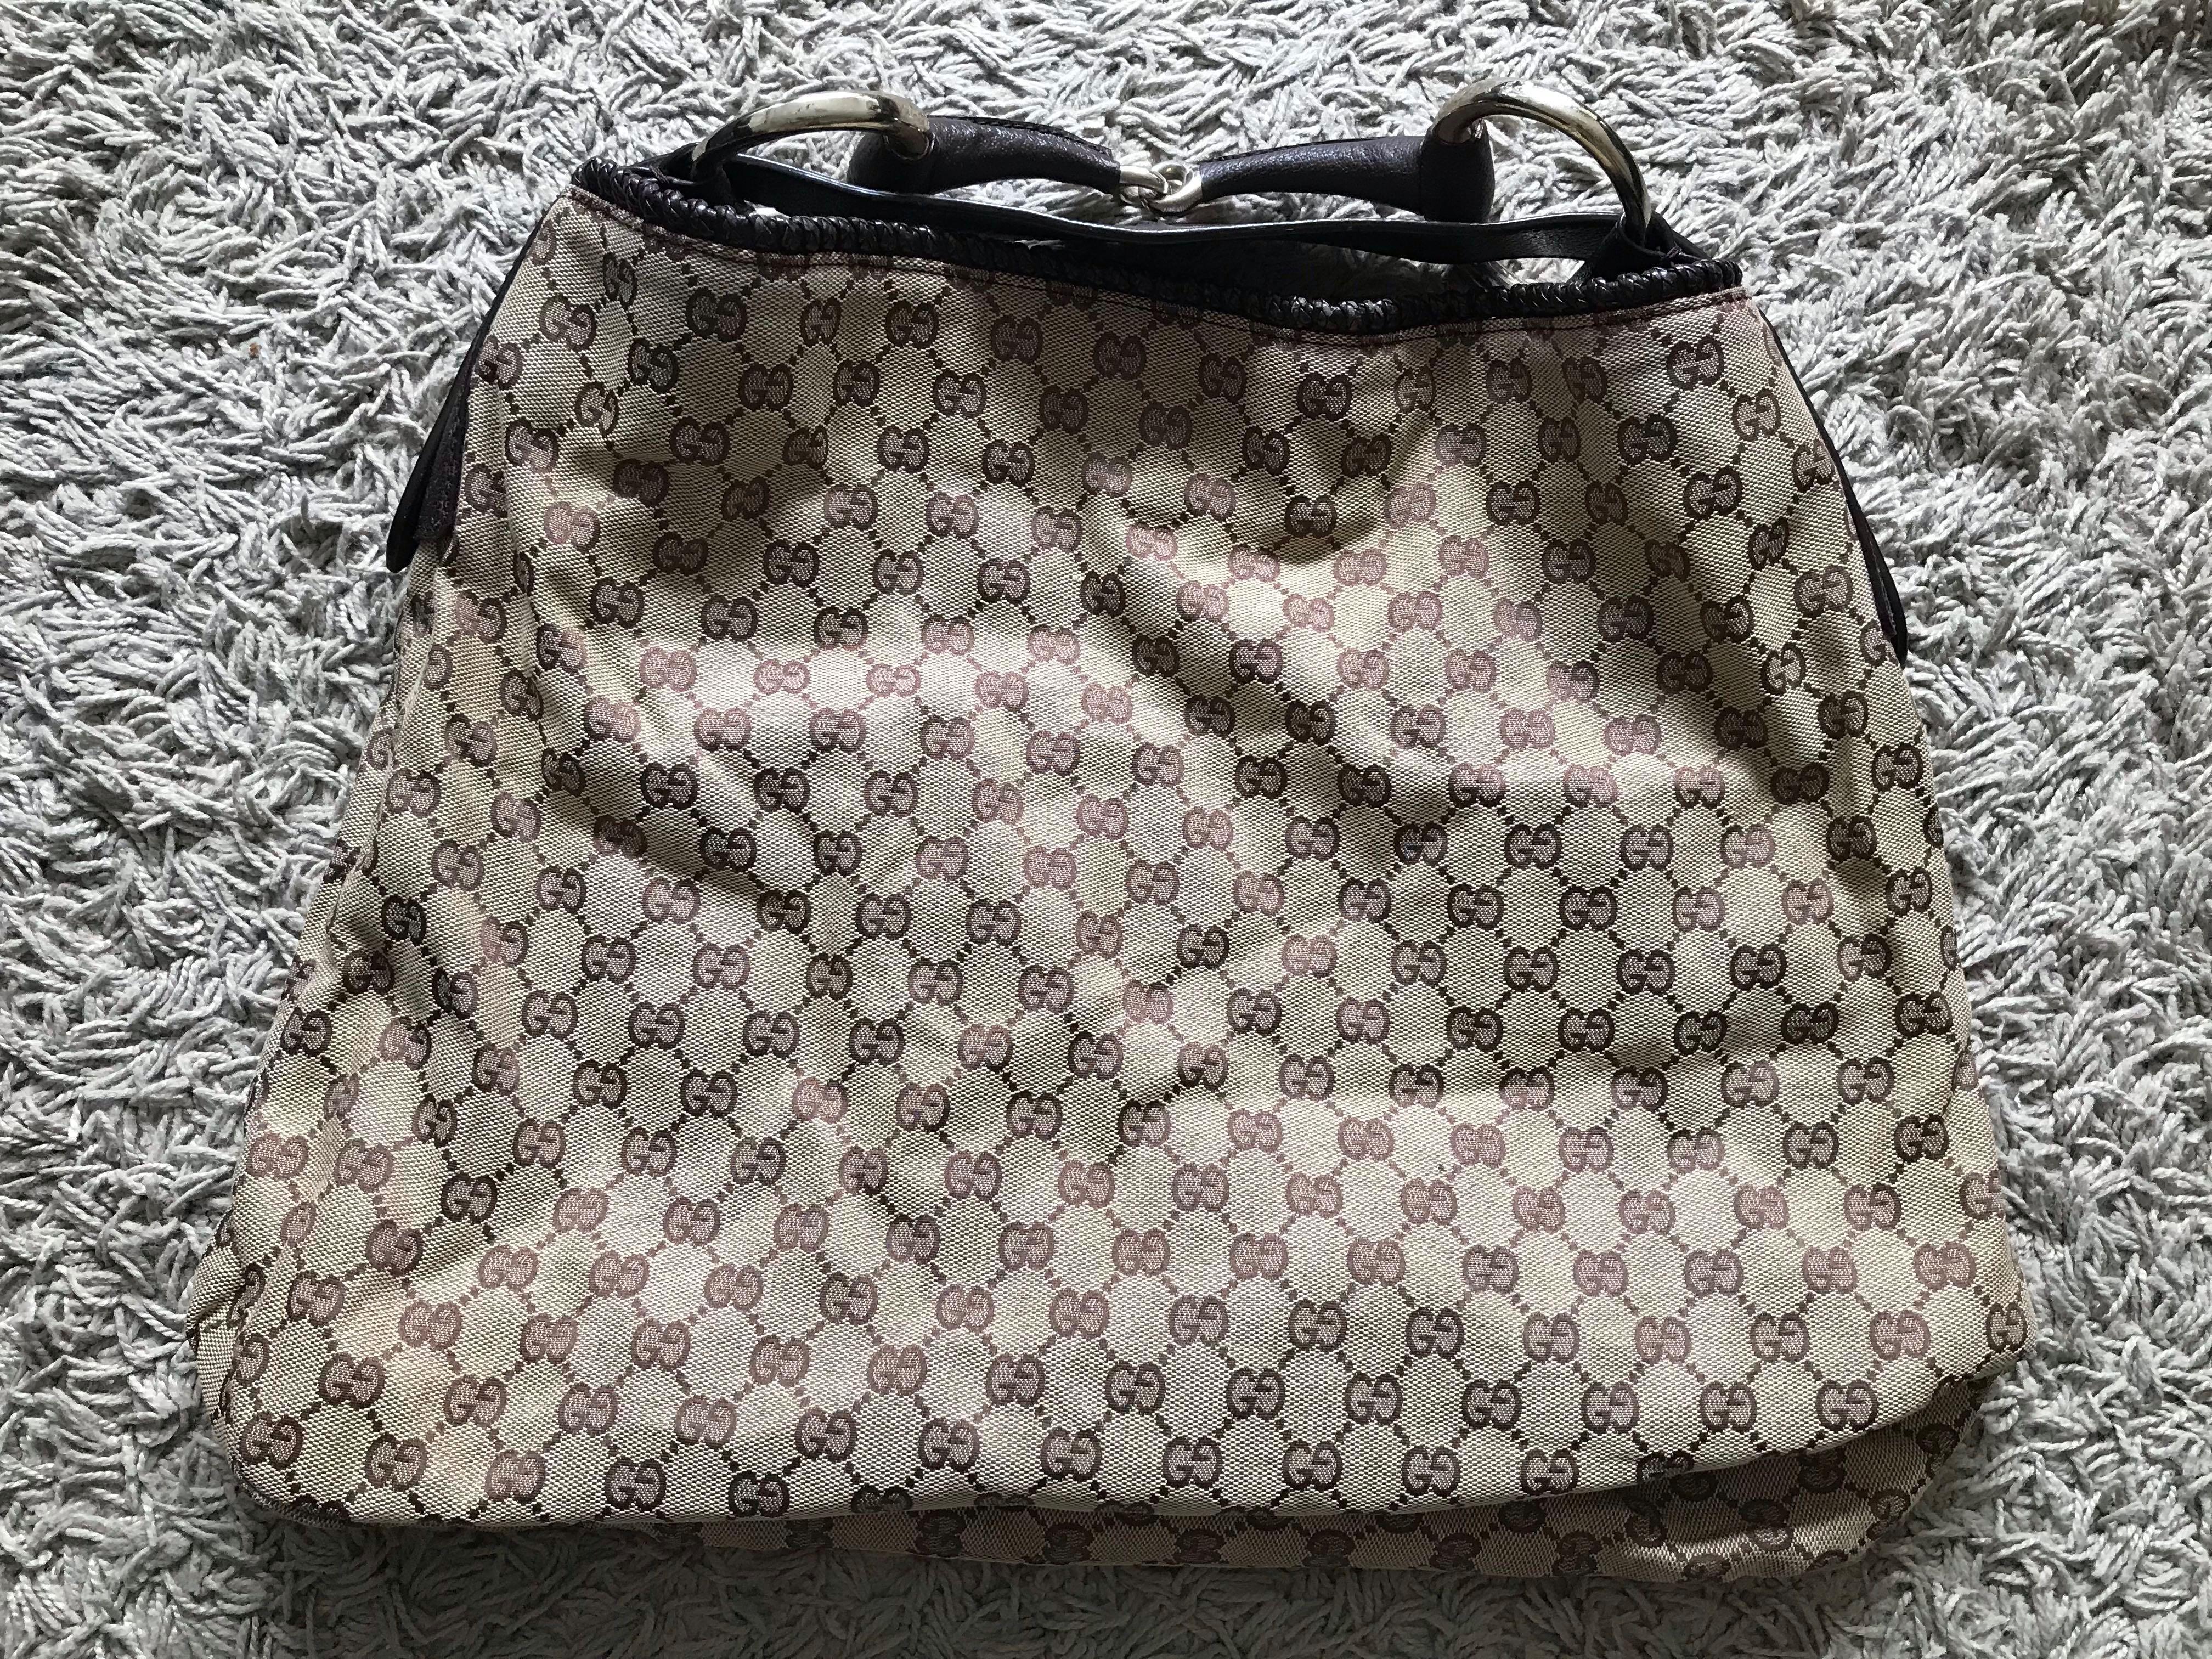 GUCCI (Vintage) - GG Guccissima Horsebit Hobo bag w/ … - Gem